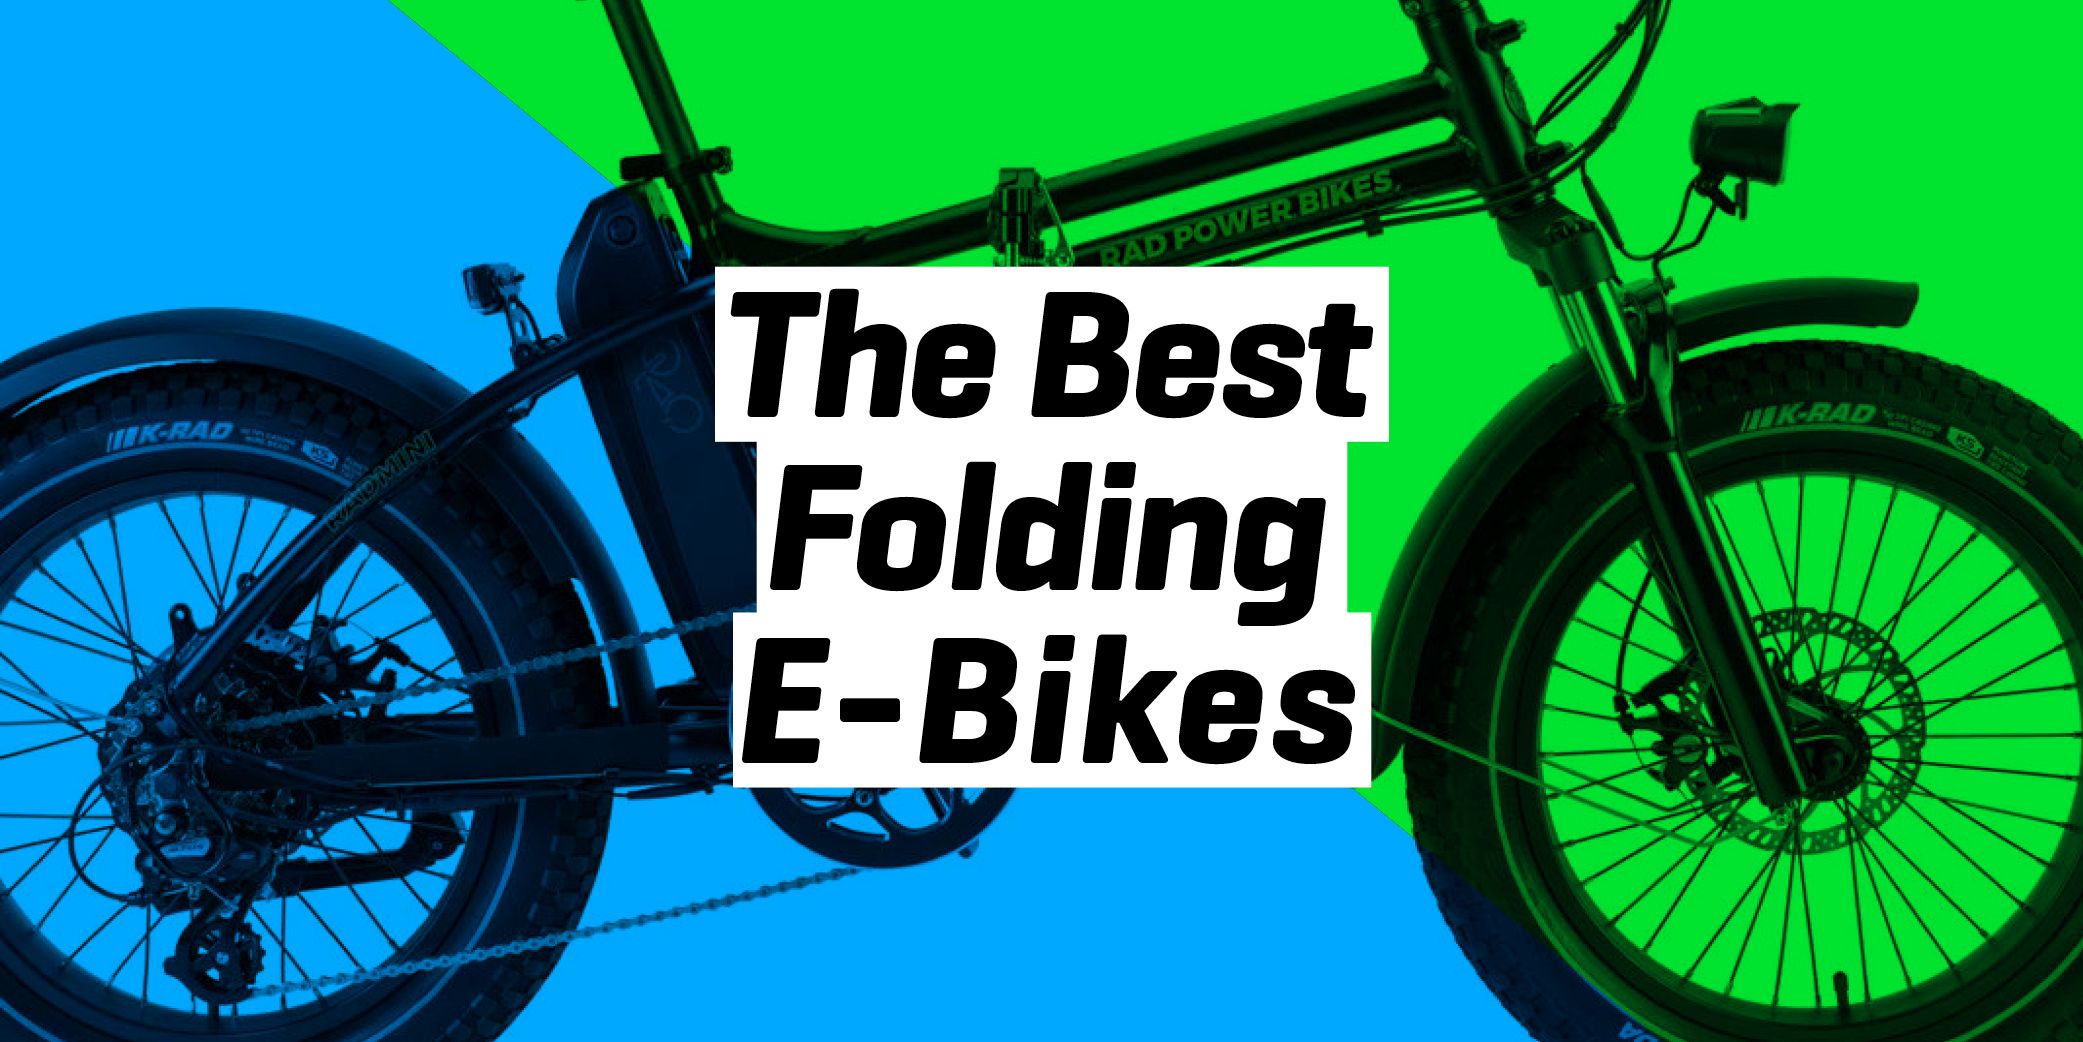 used folding electric bike